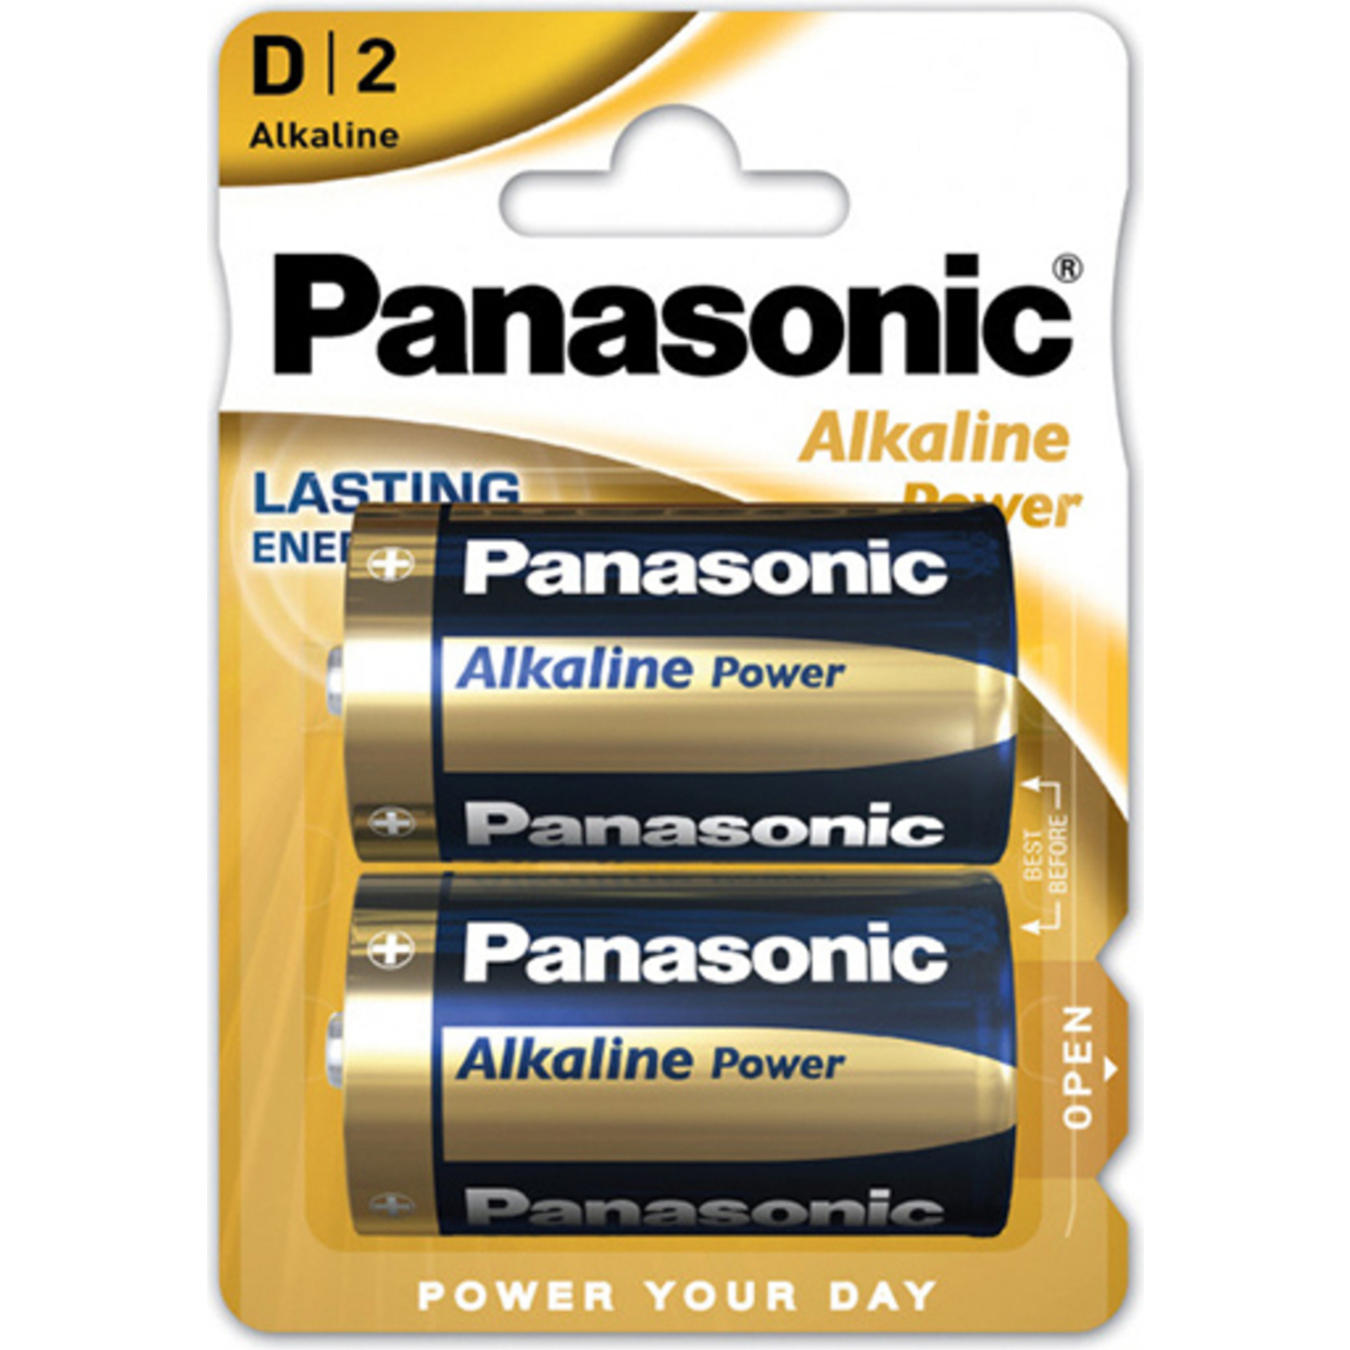 Panasonic Alkaline Power D Battery 2pcs